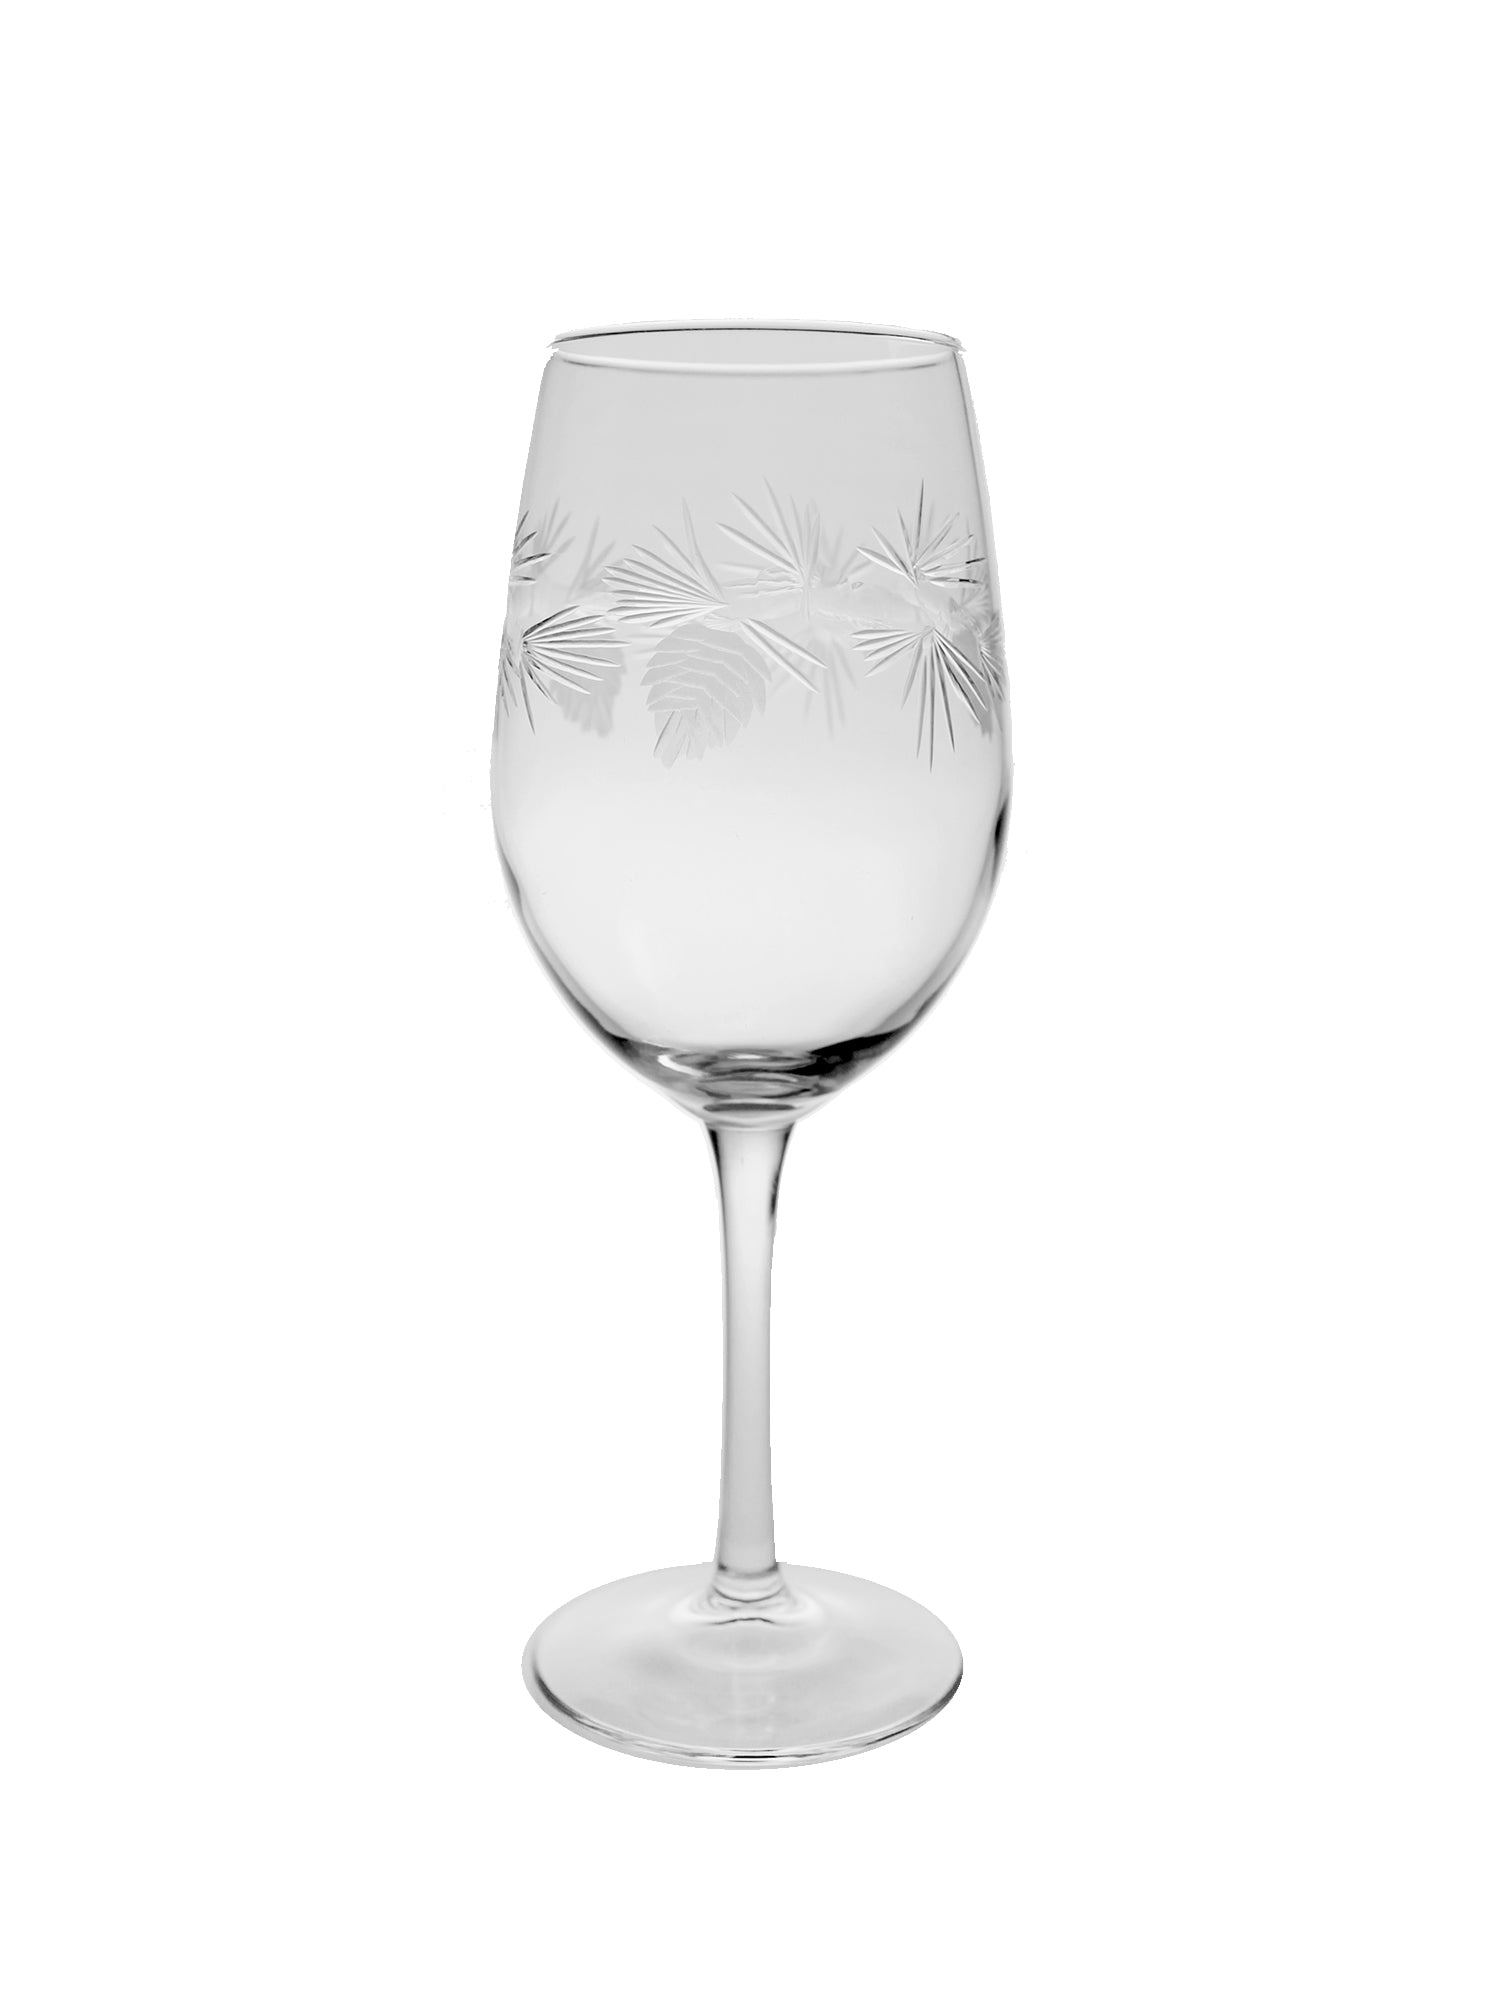 Mt. Washington New Hampshire White Mountains Engraved Crystal Stemless Wine  Glass 1 Single Wine Glass 